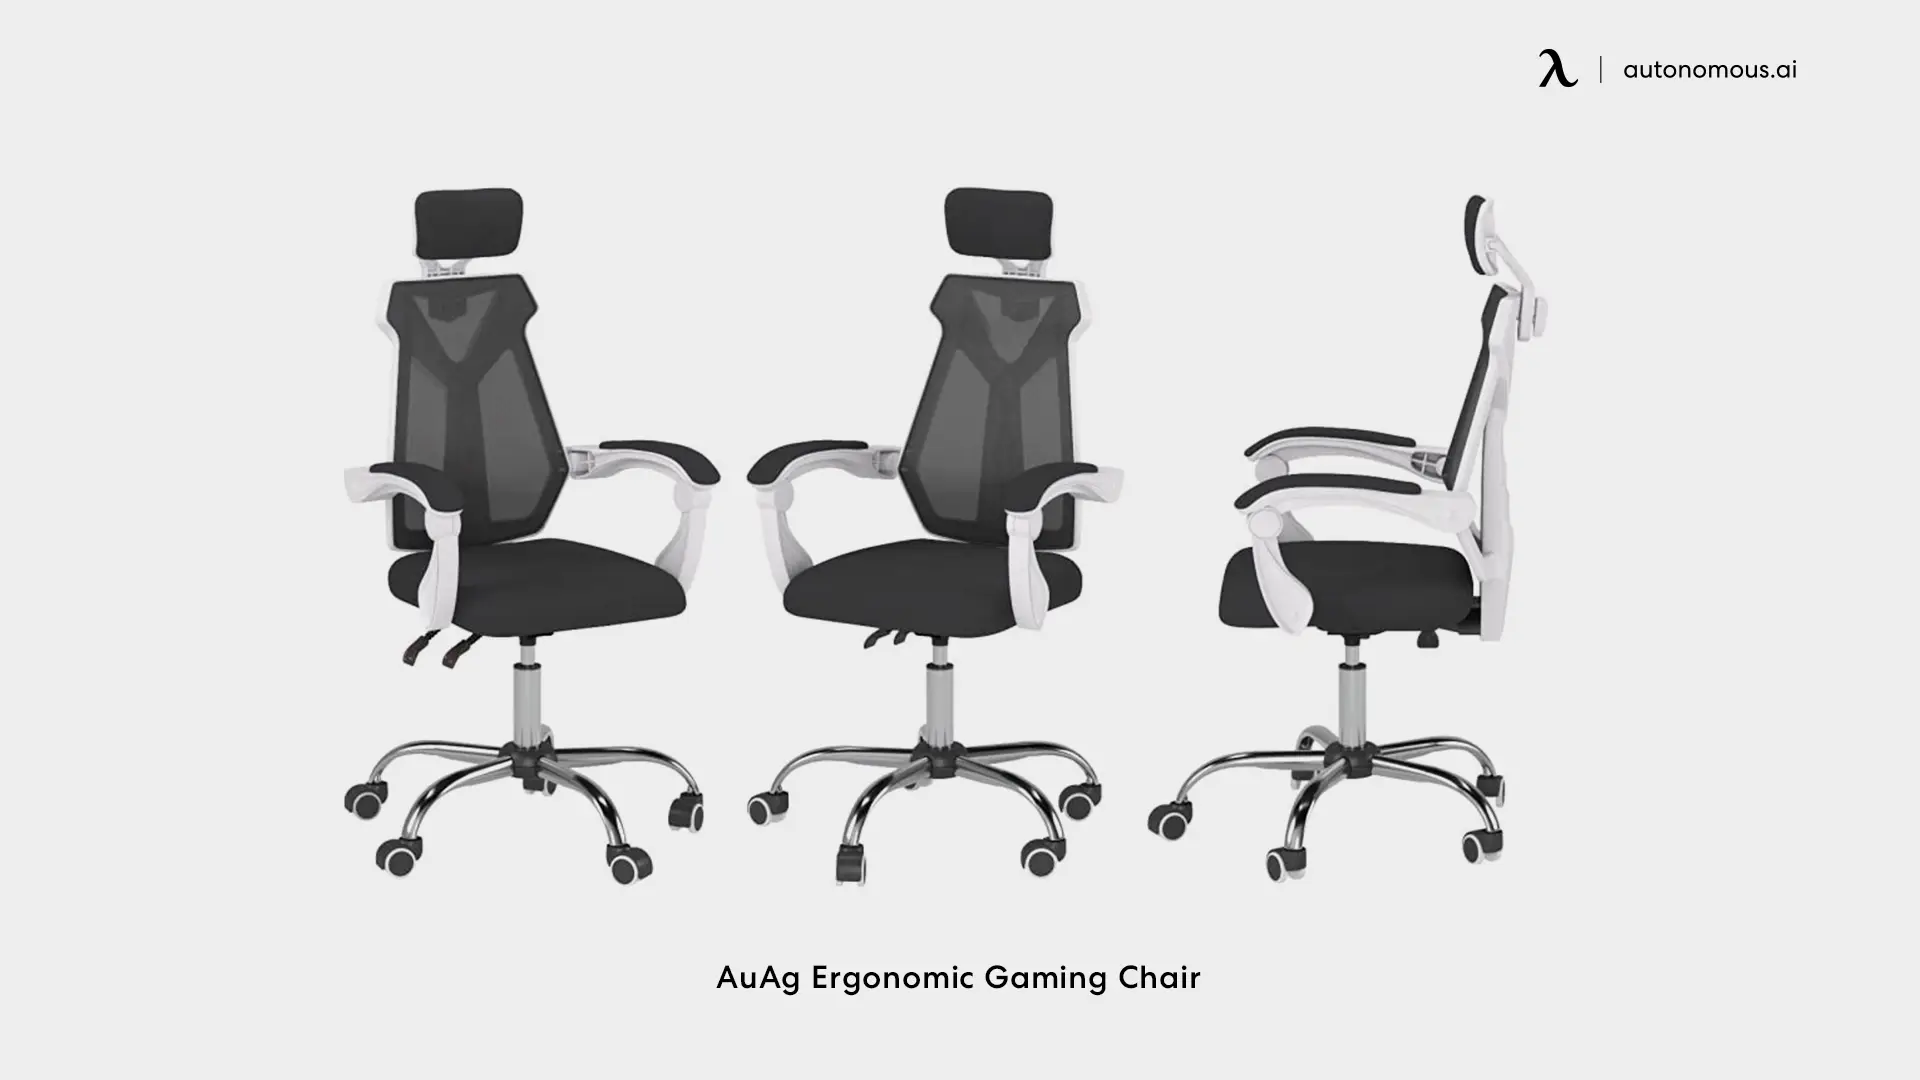 AuAg Ergonomic Gaming Chair - Black and white gaming chair